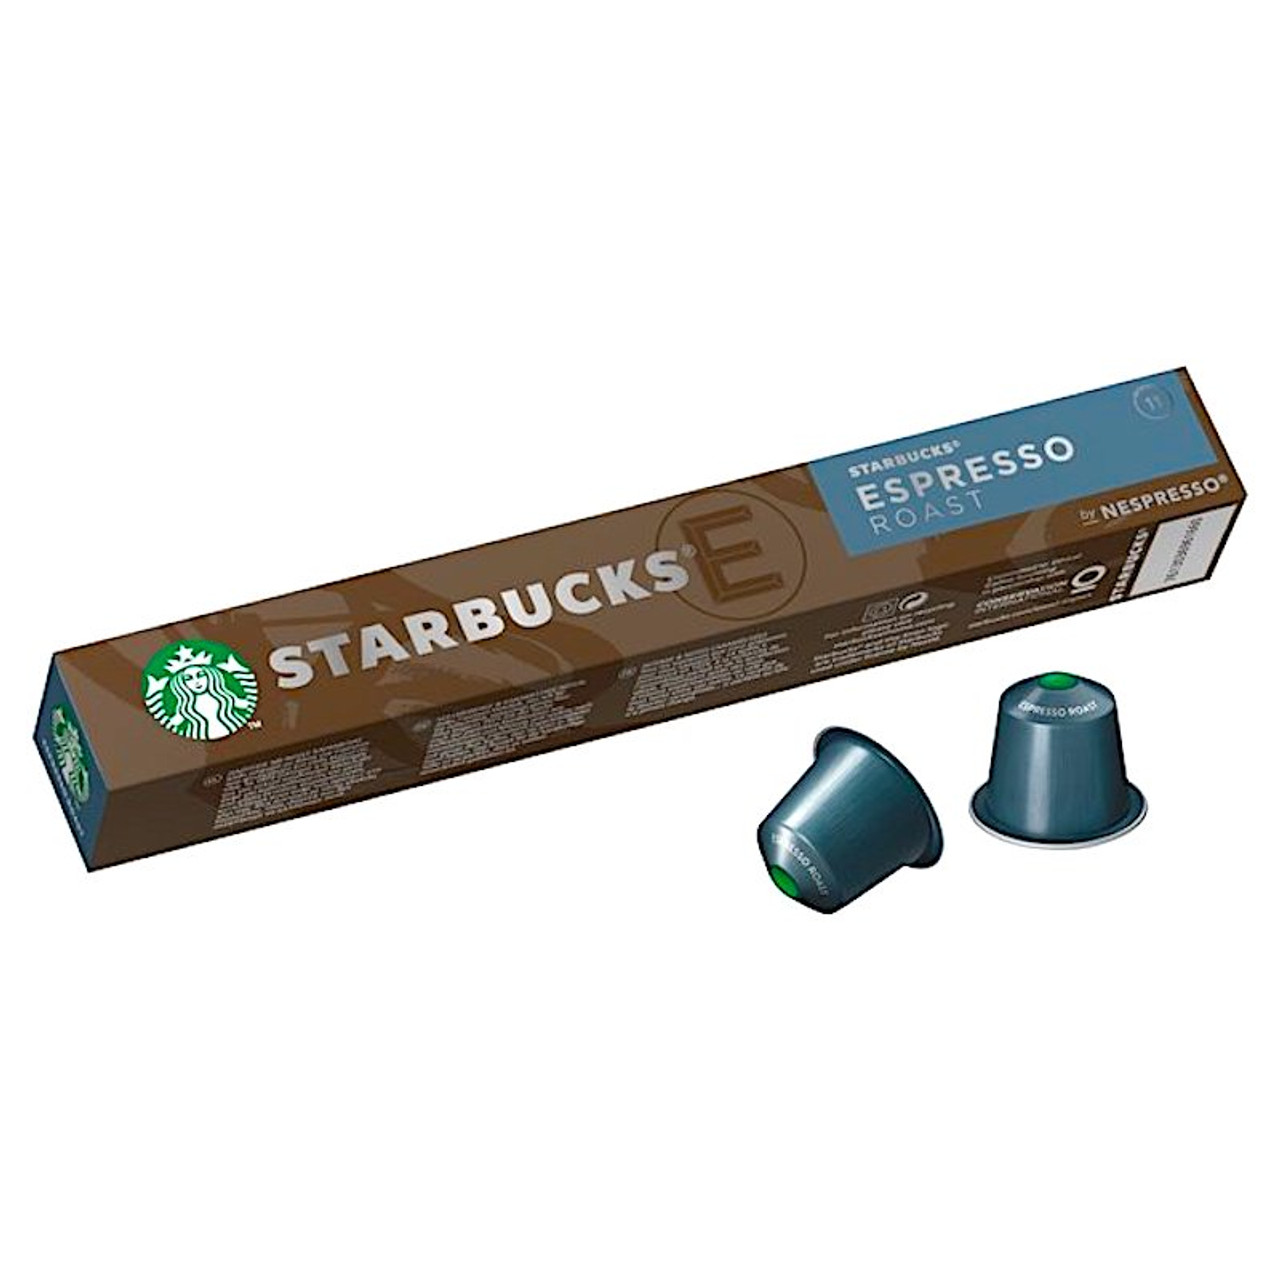 Starbucks by Nespresso Espresso Roast Capsules, 60-Count 